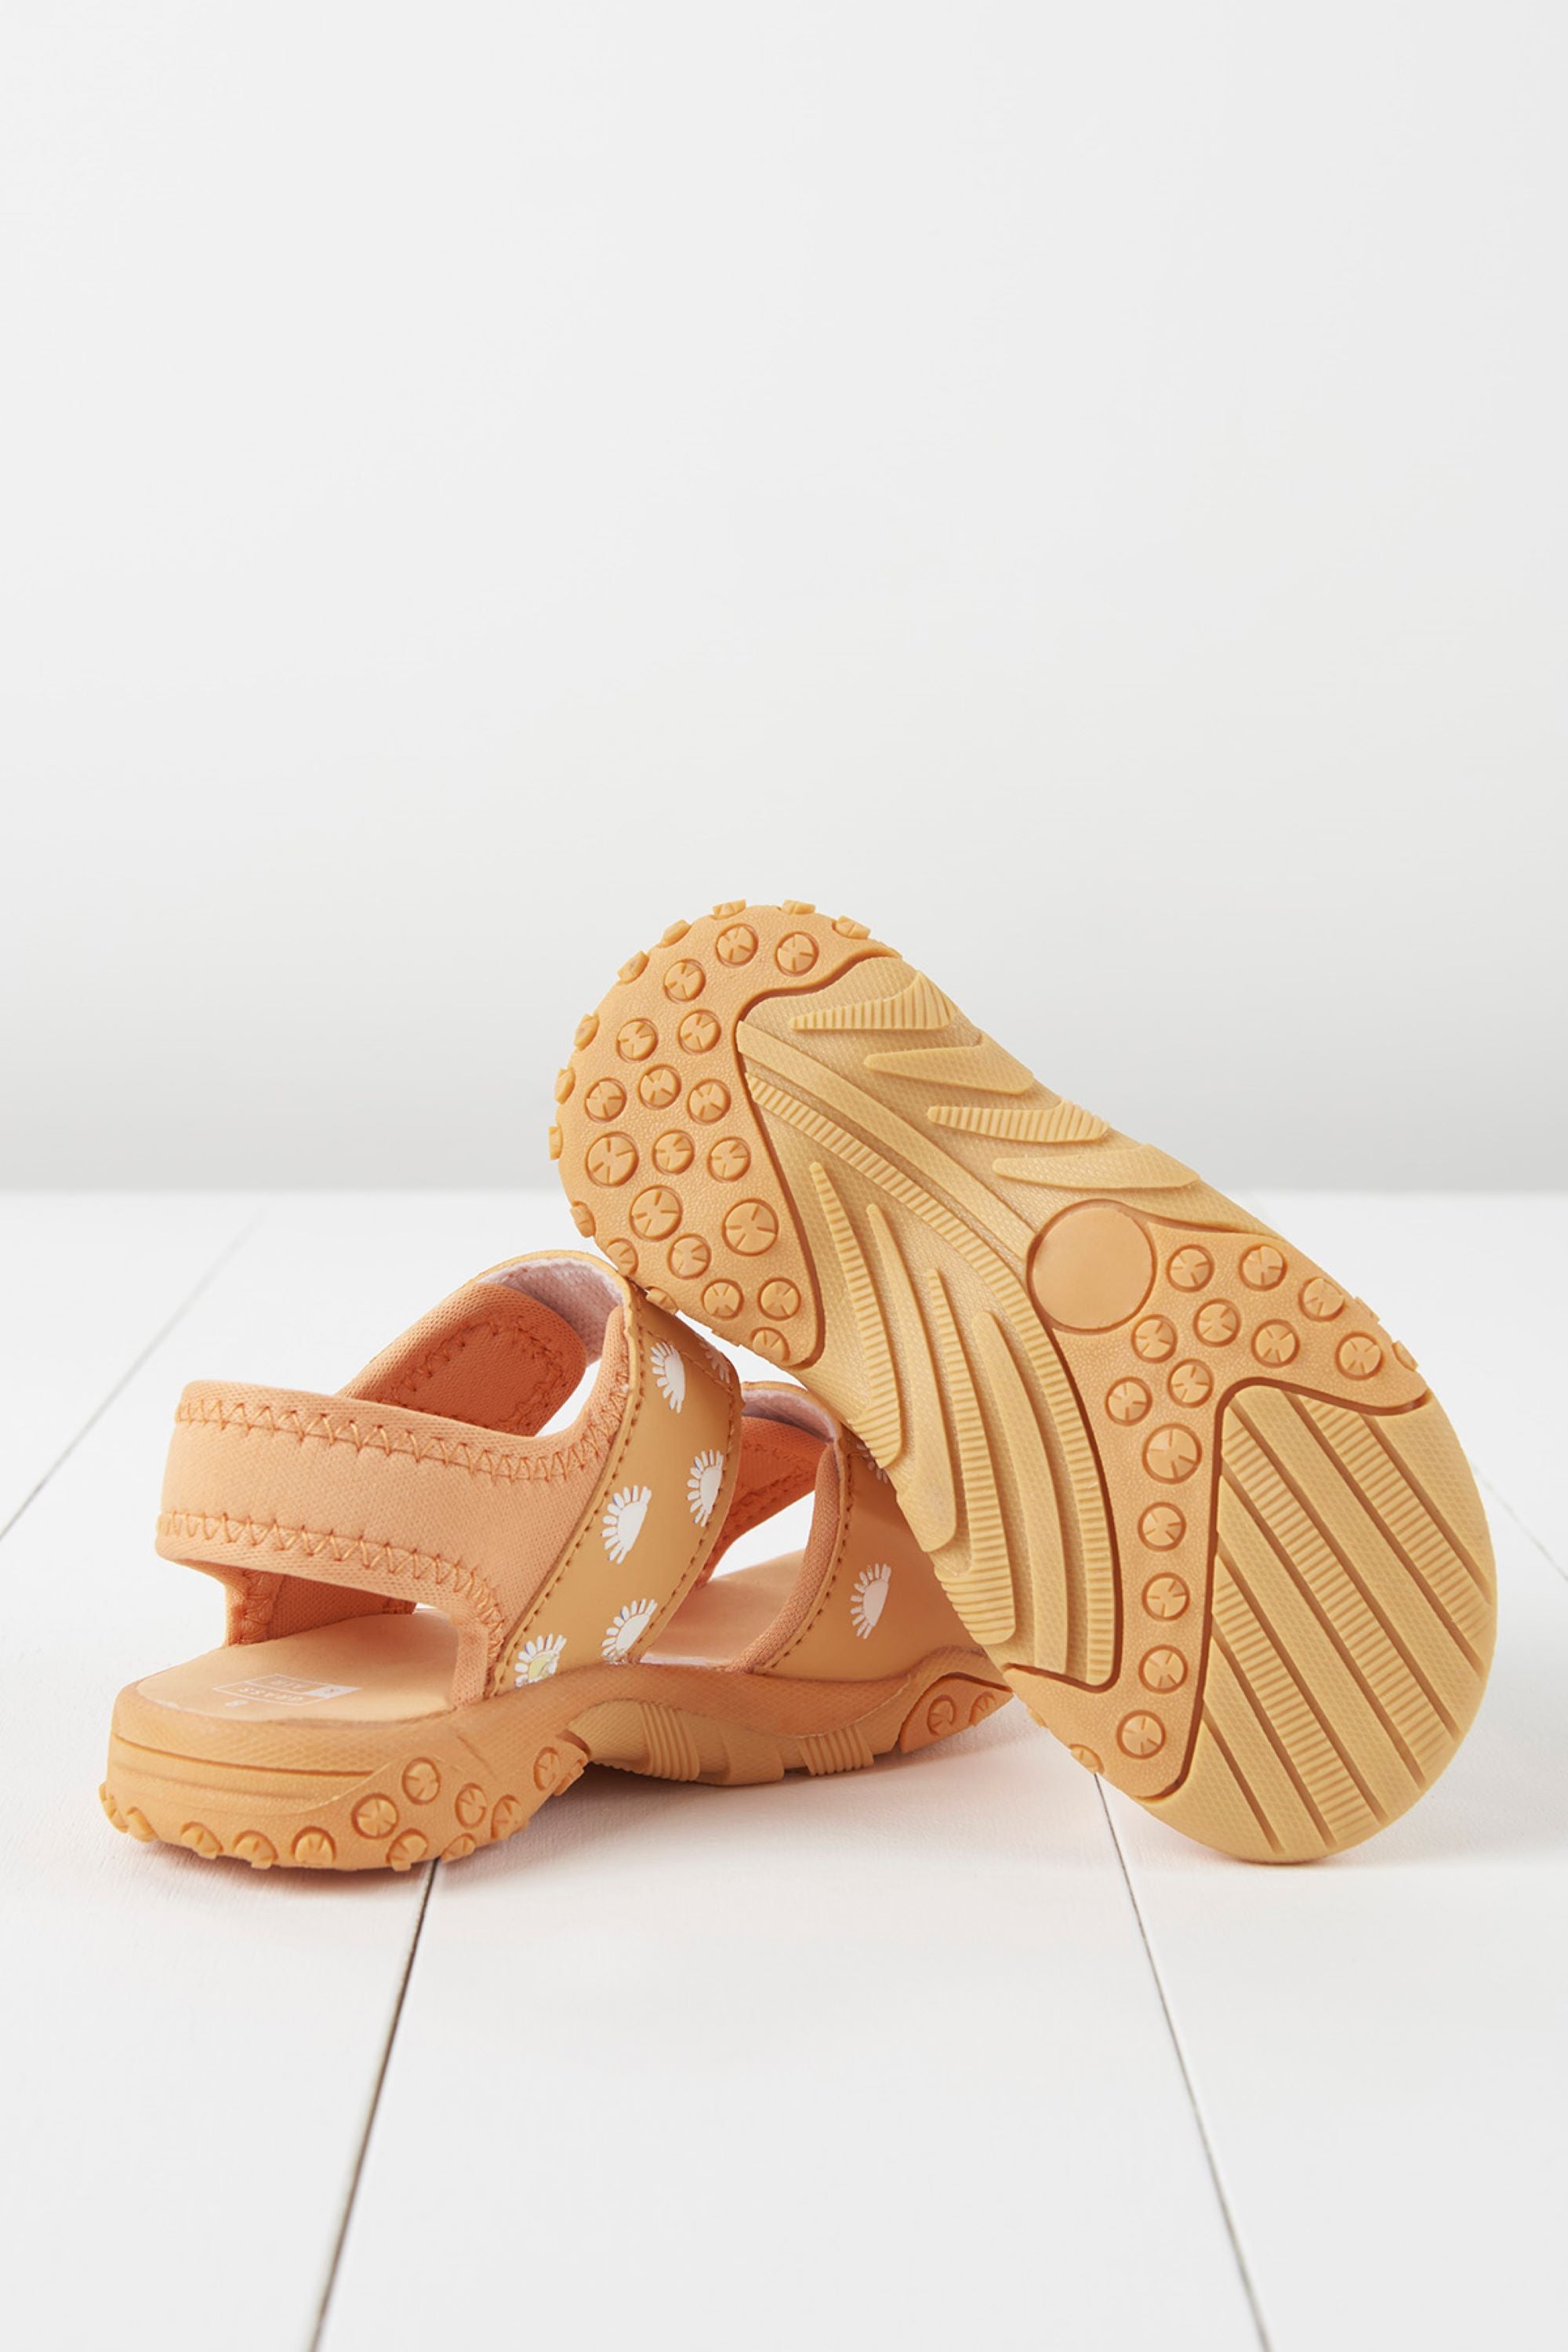 Peach Colour-Changing Sandals